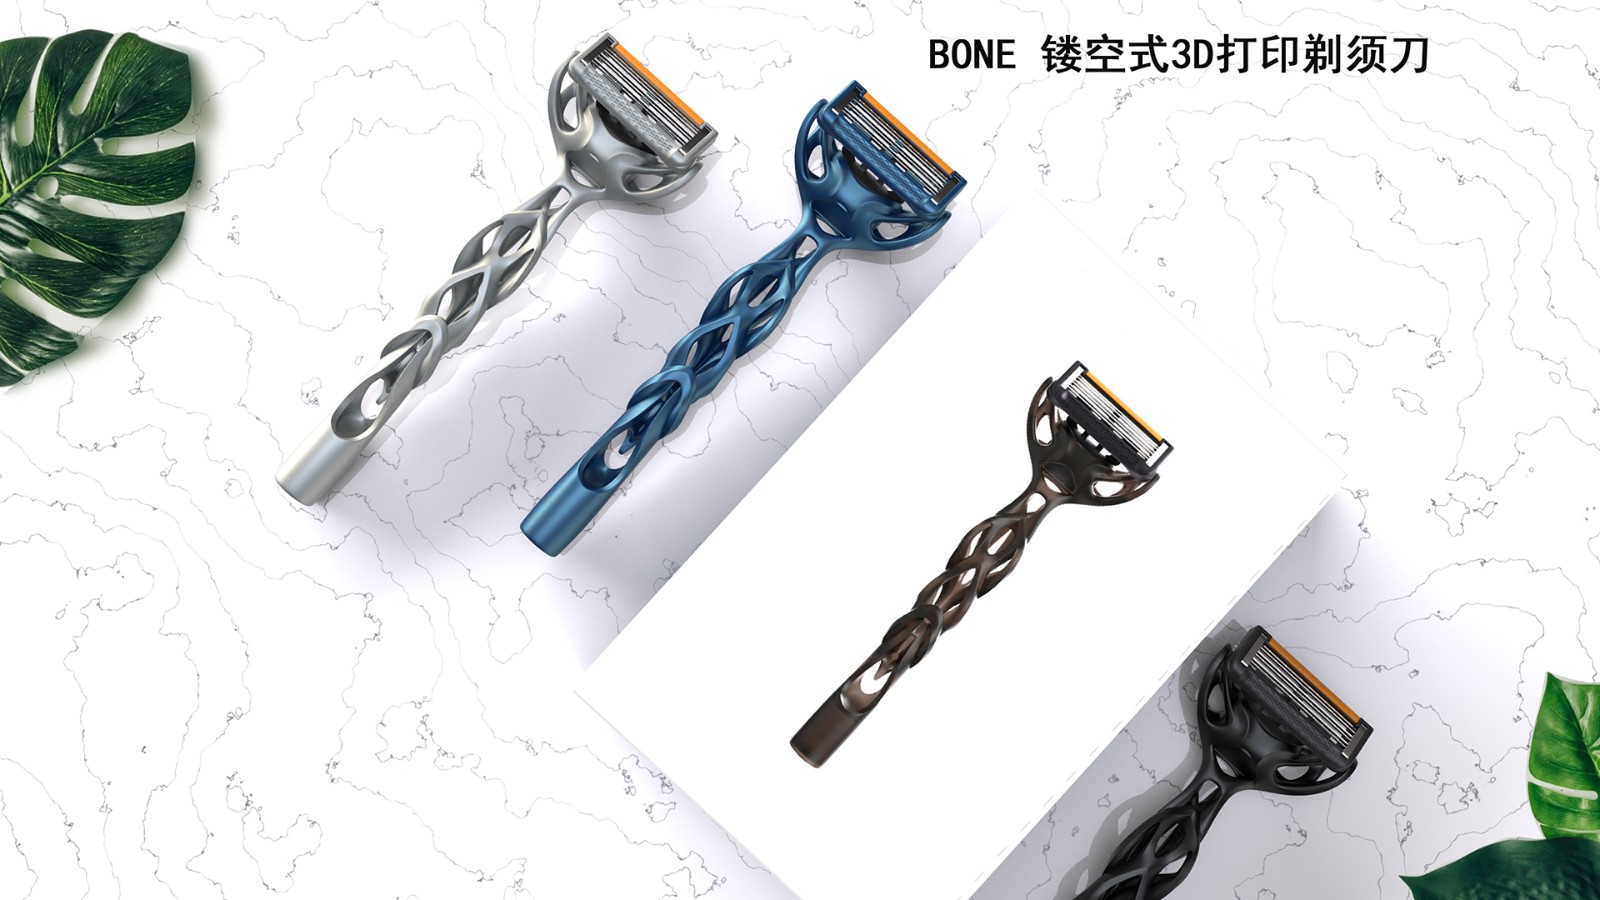 BONE 镂空式3D打印剃须刀